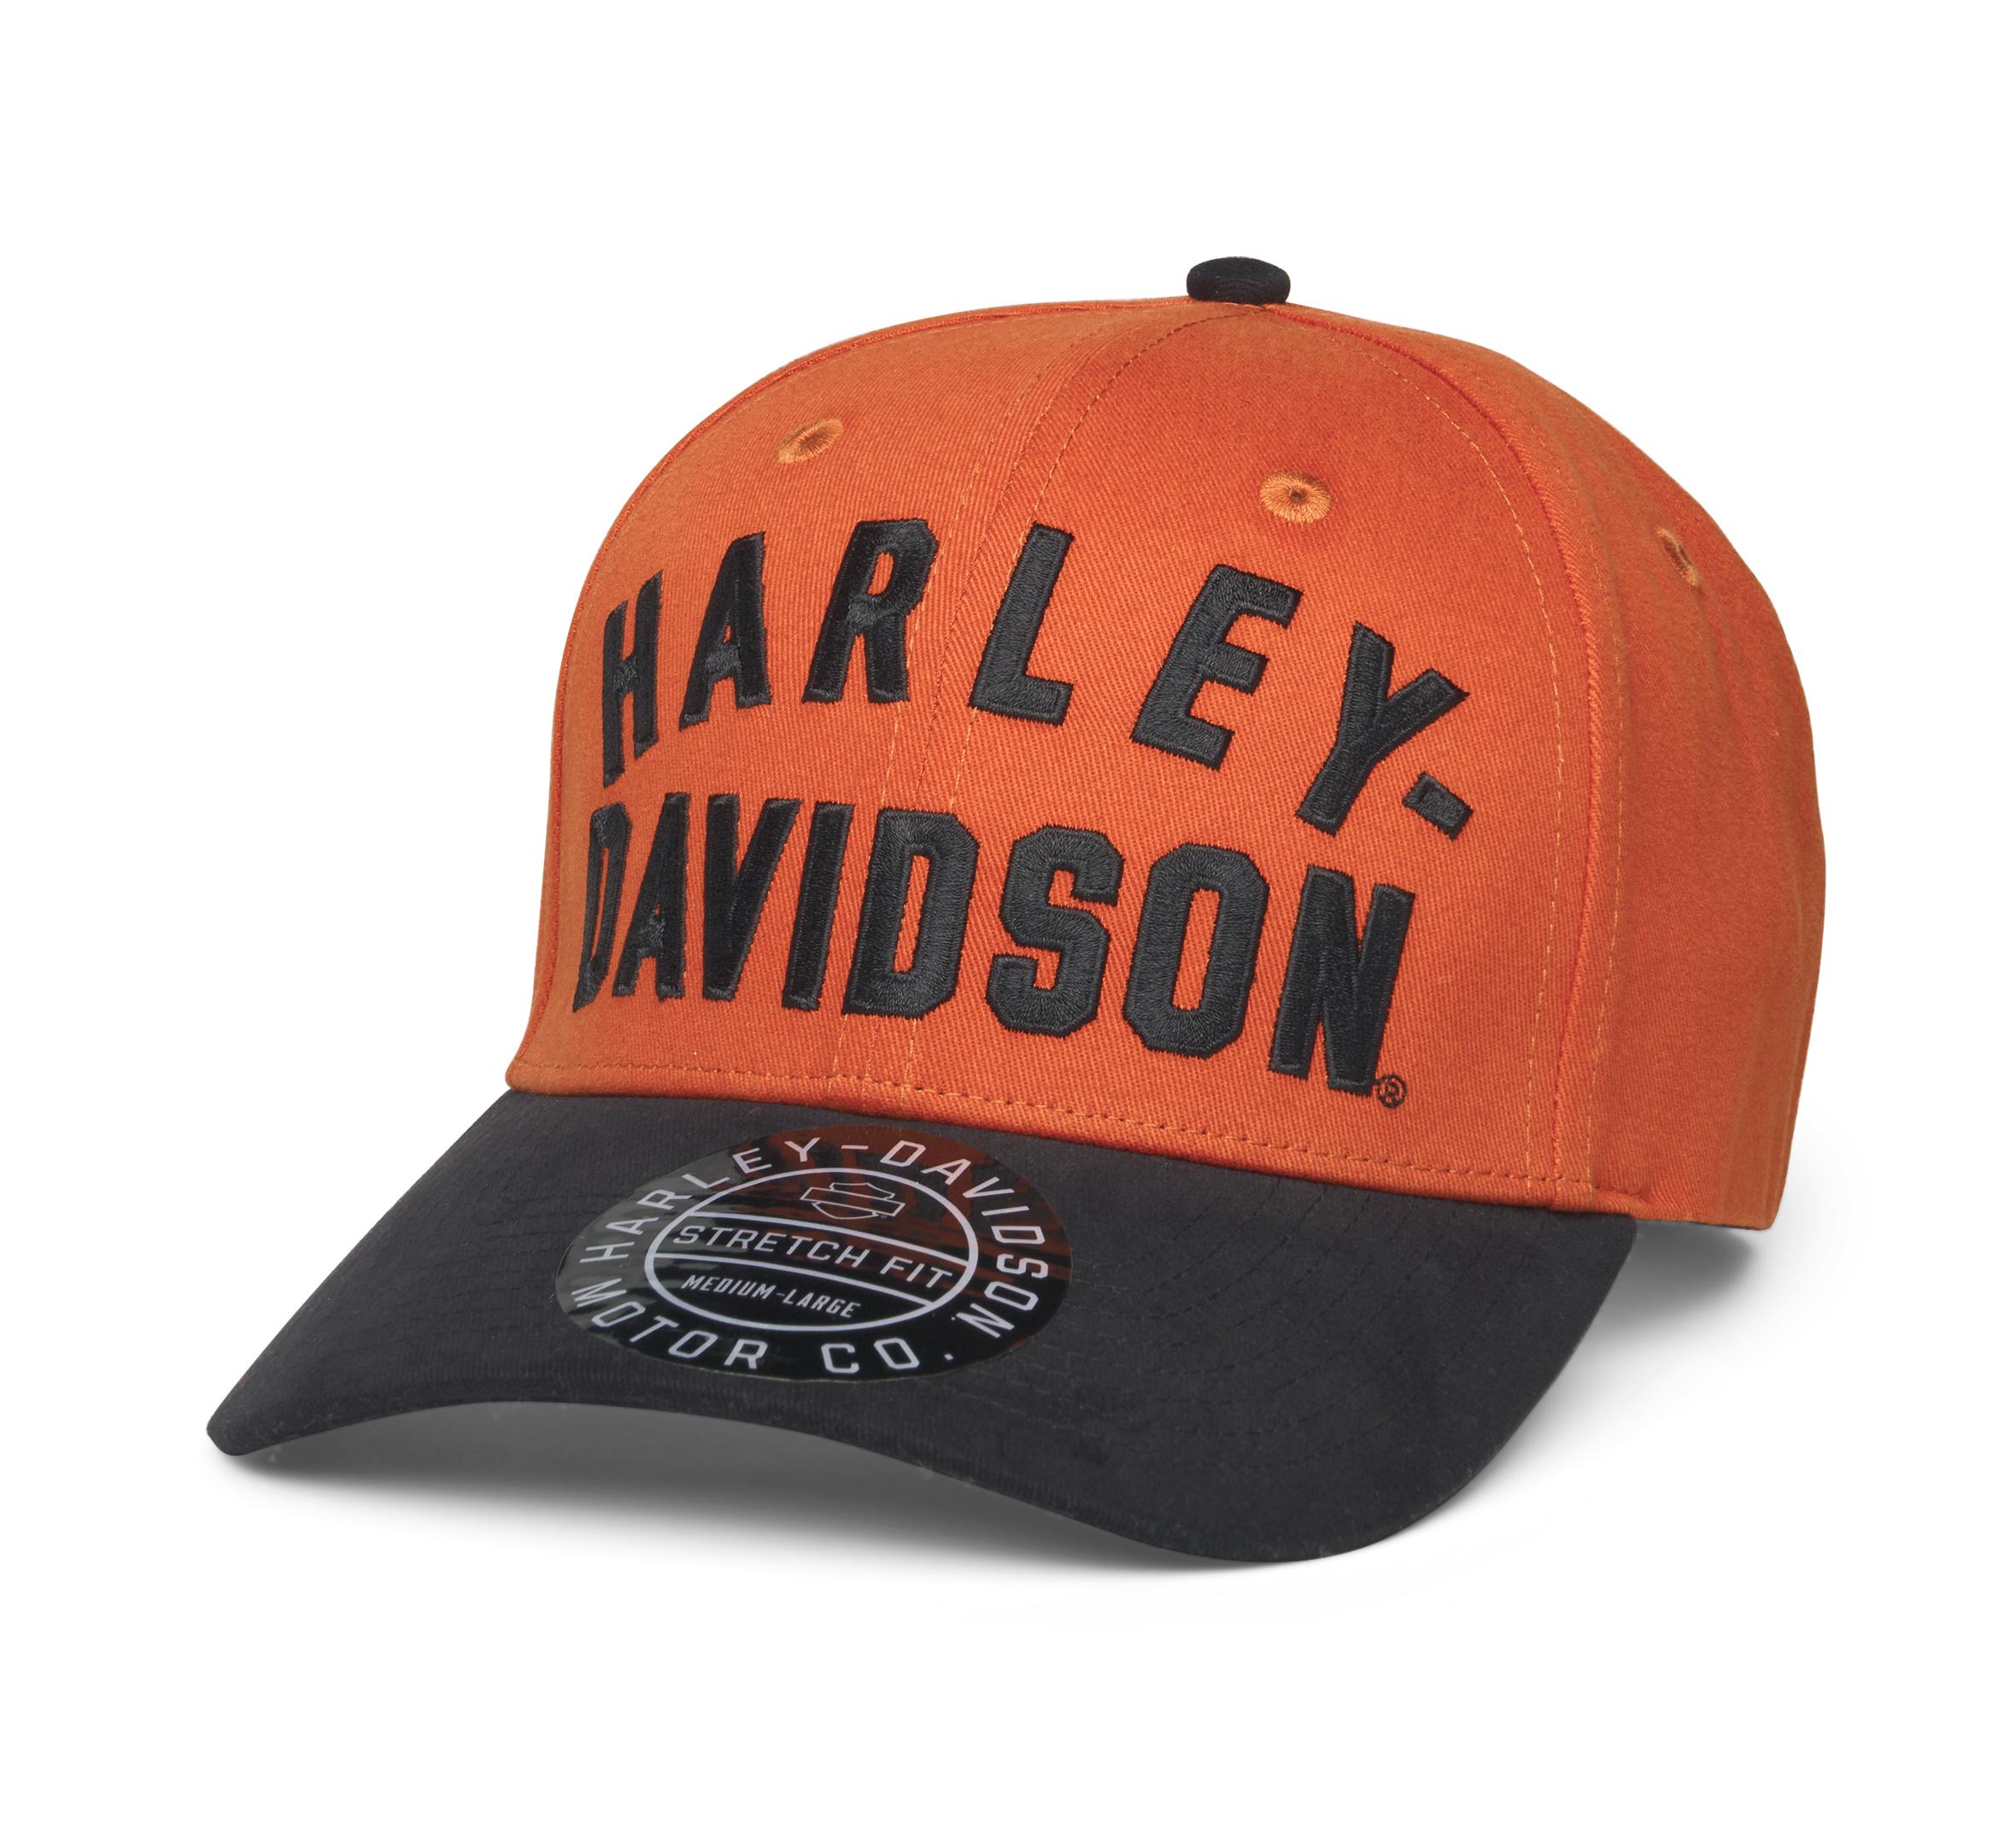 Westion Logo Embroidered Black Color Adjustable Baseball Caps for Men and Women Hat Travel Cap Car Racing Motor Hat 